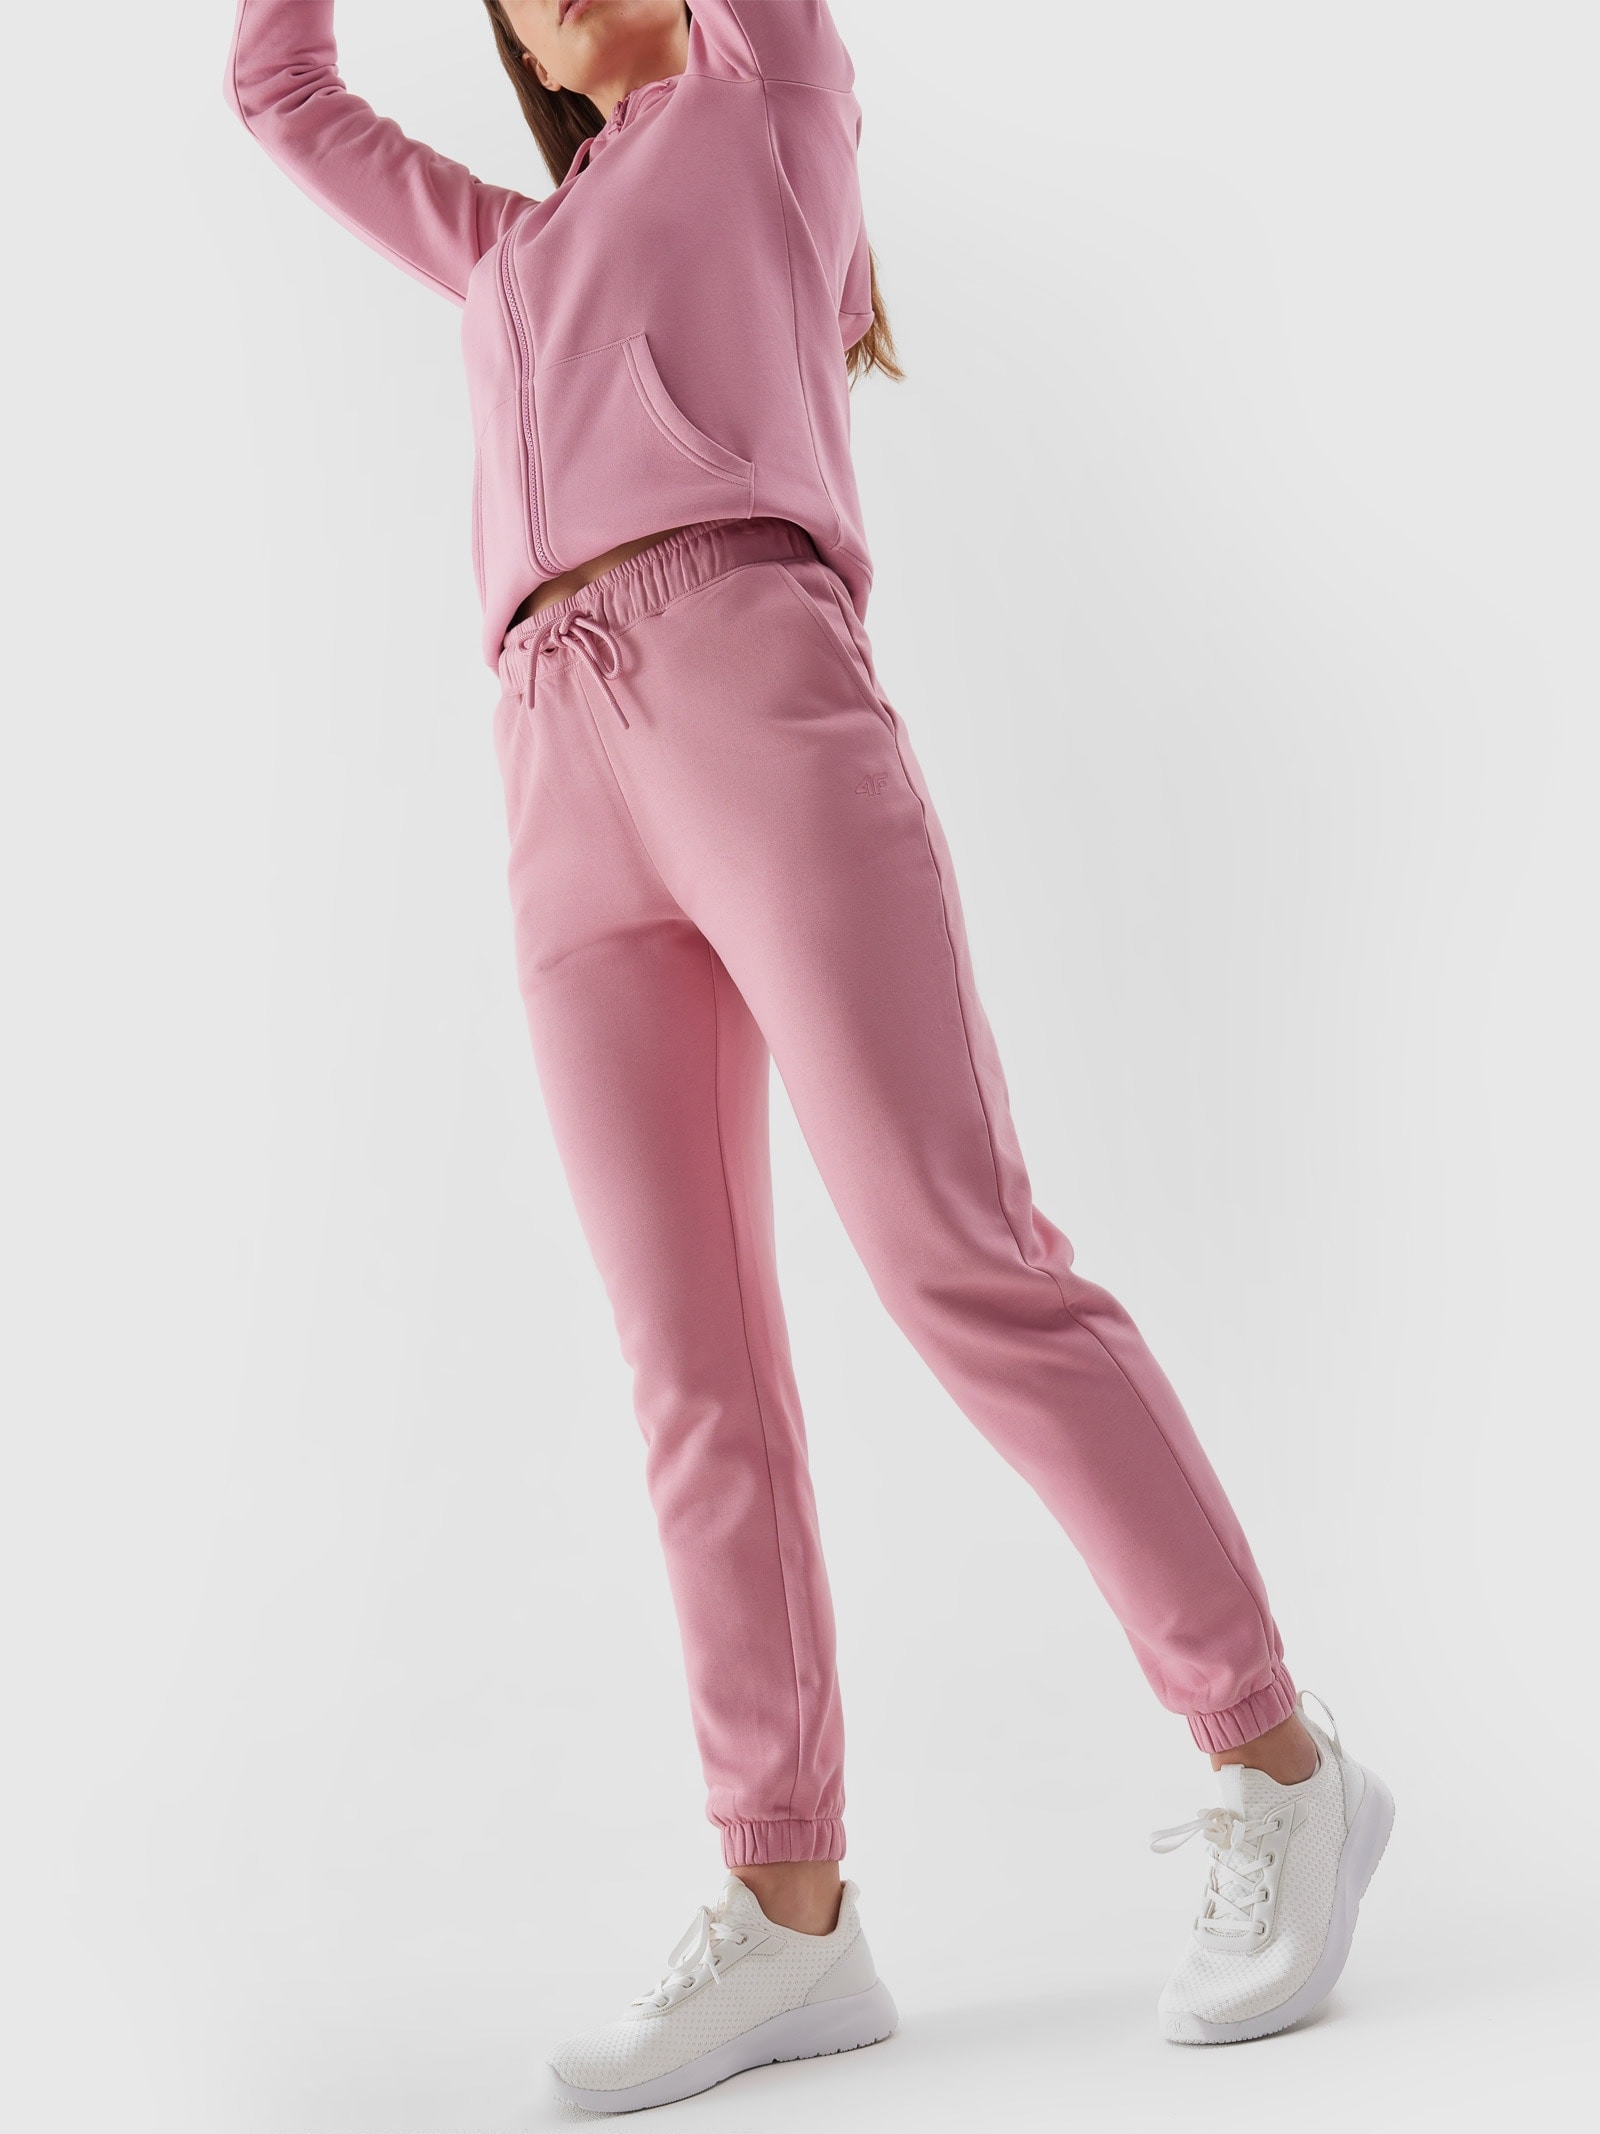 Dámske teplákové nohavice typu jogger - pudrovo ružové